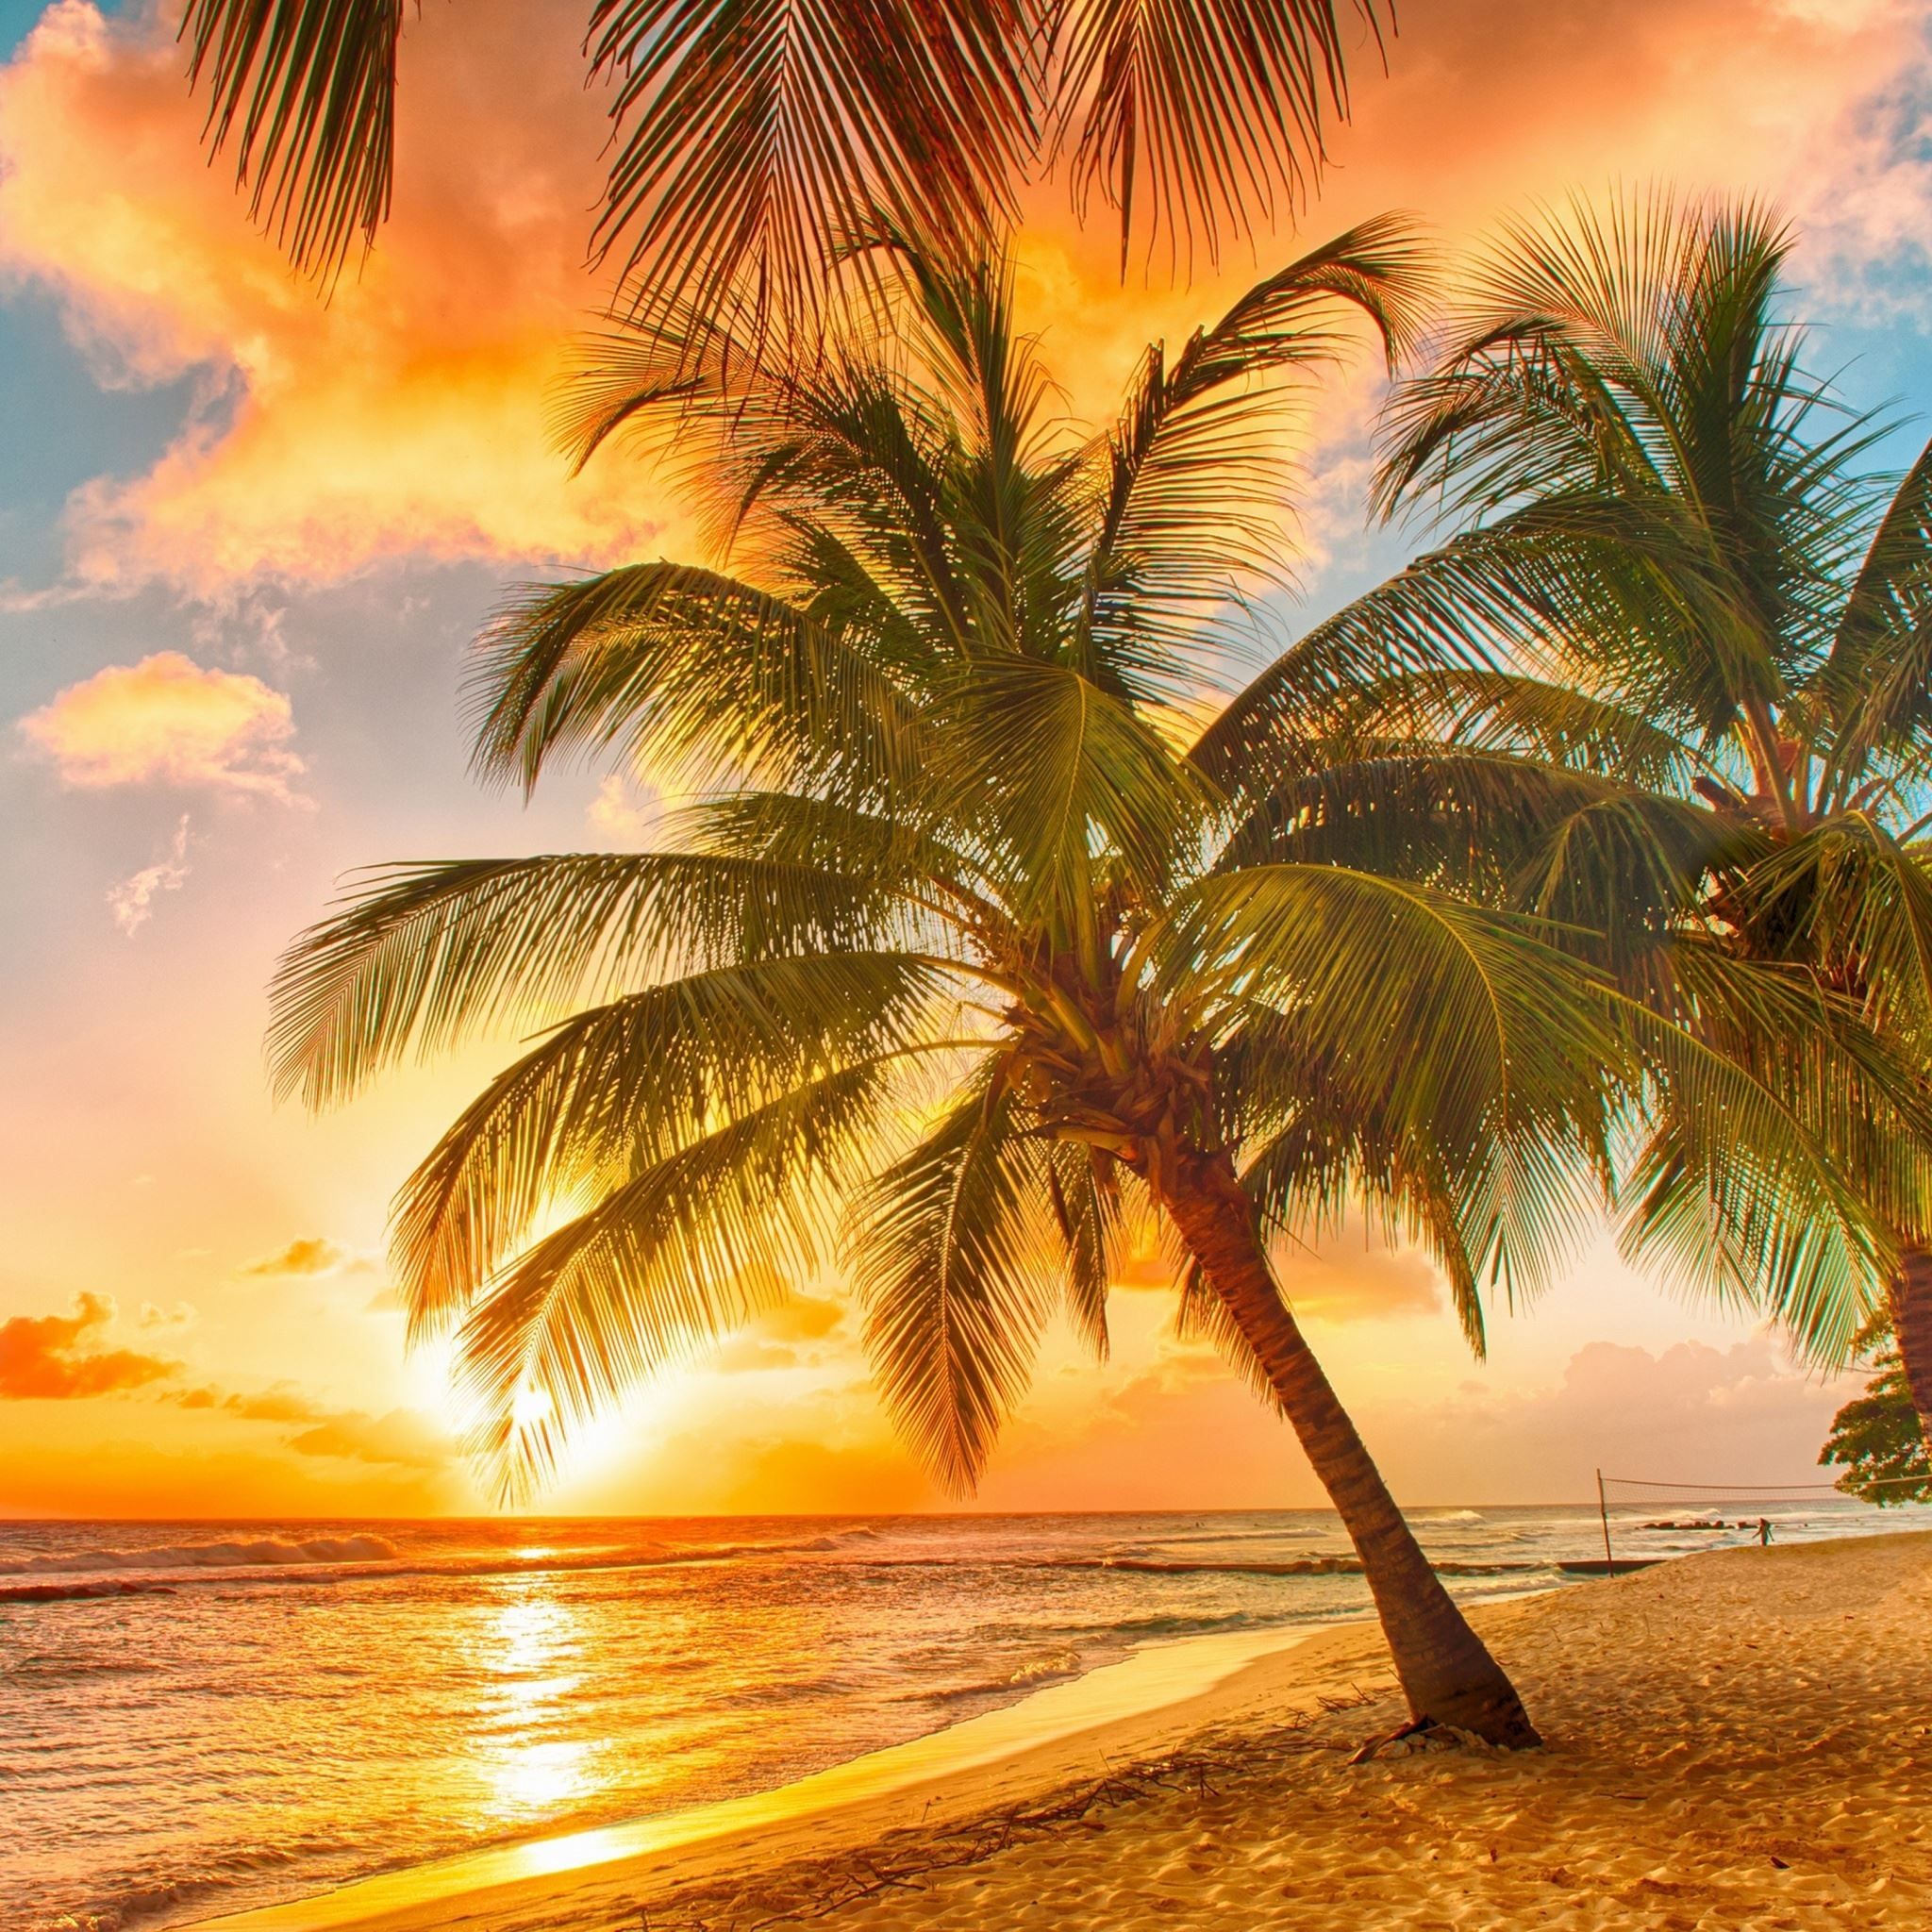 Palm Tree Tropical Beach iPad Air Wallpaper Free Download